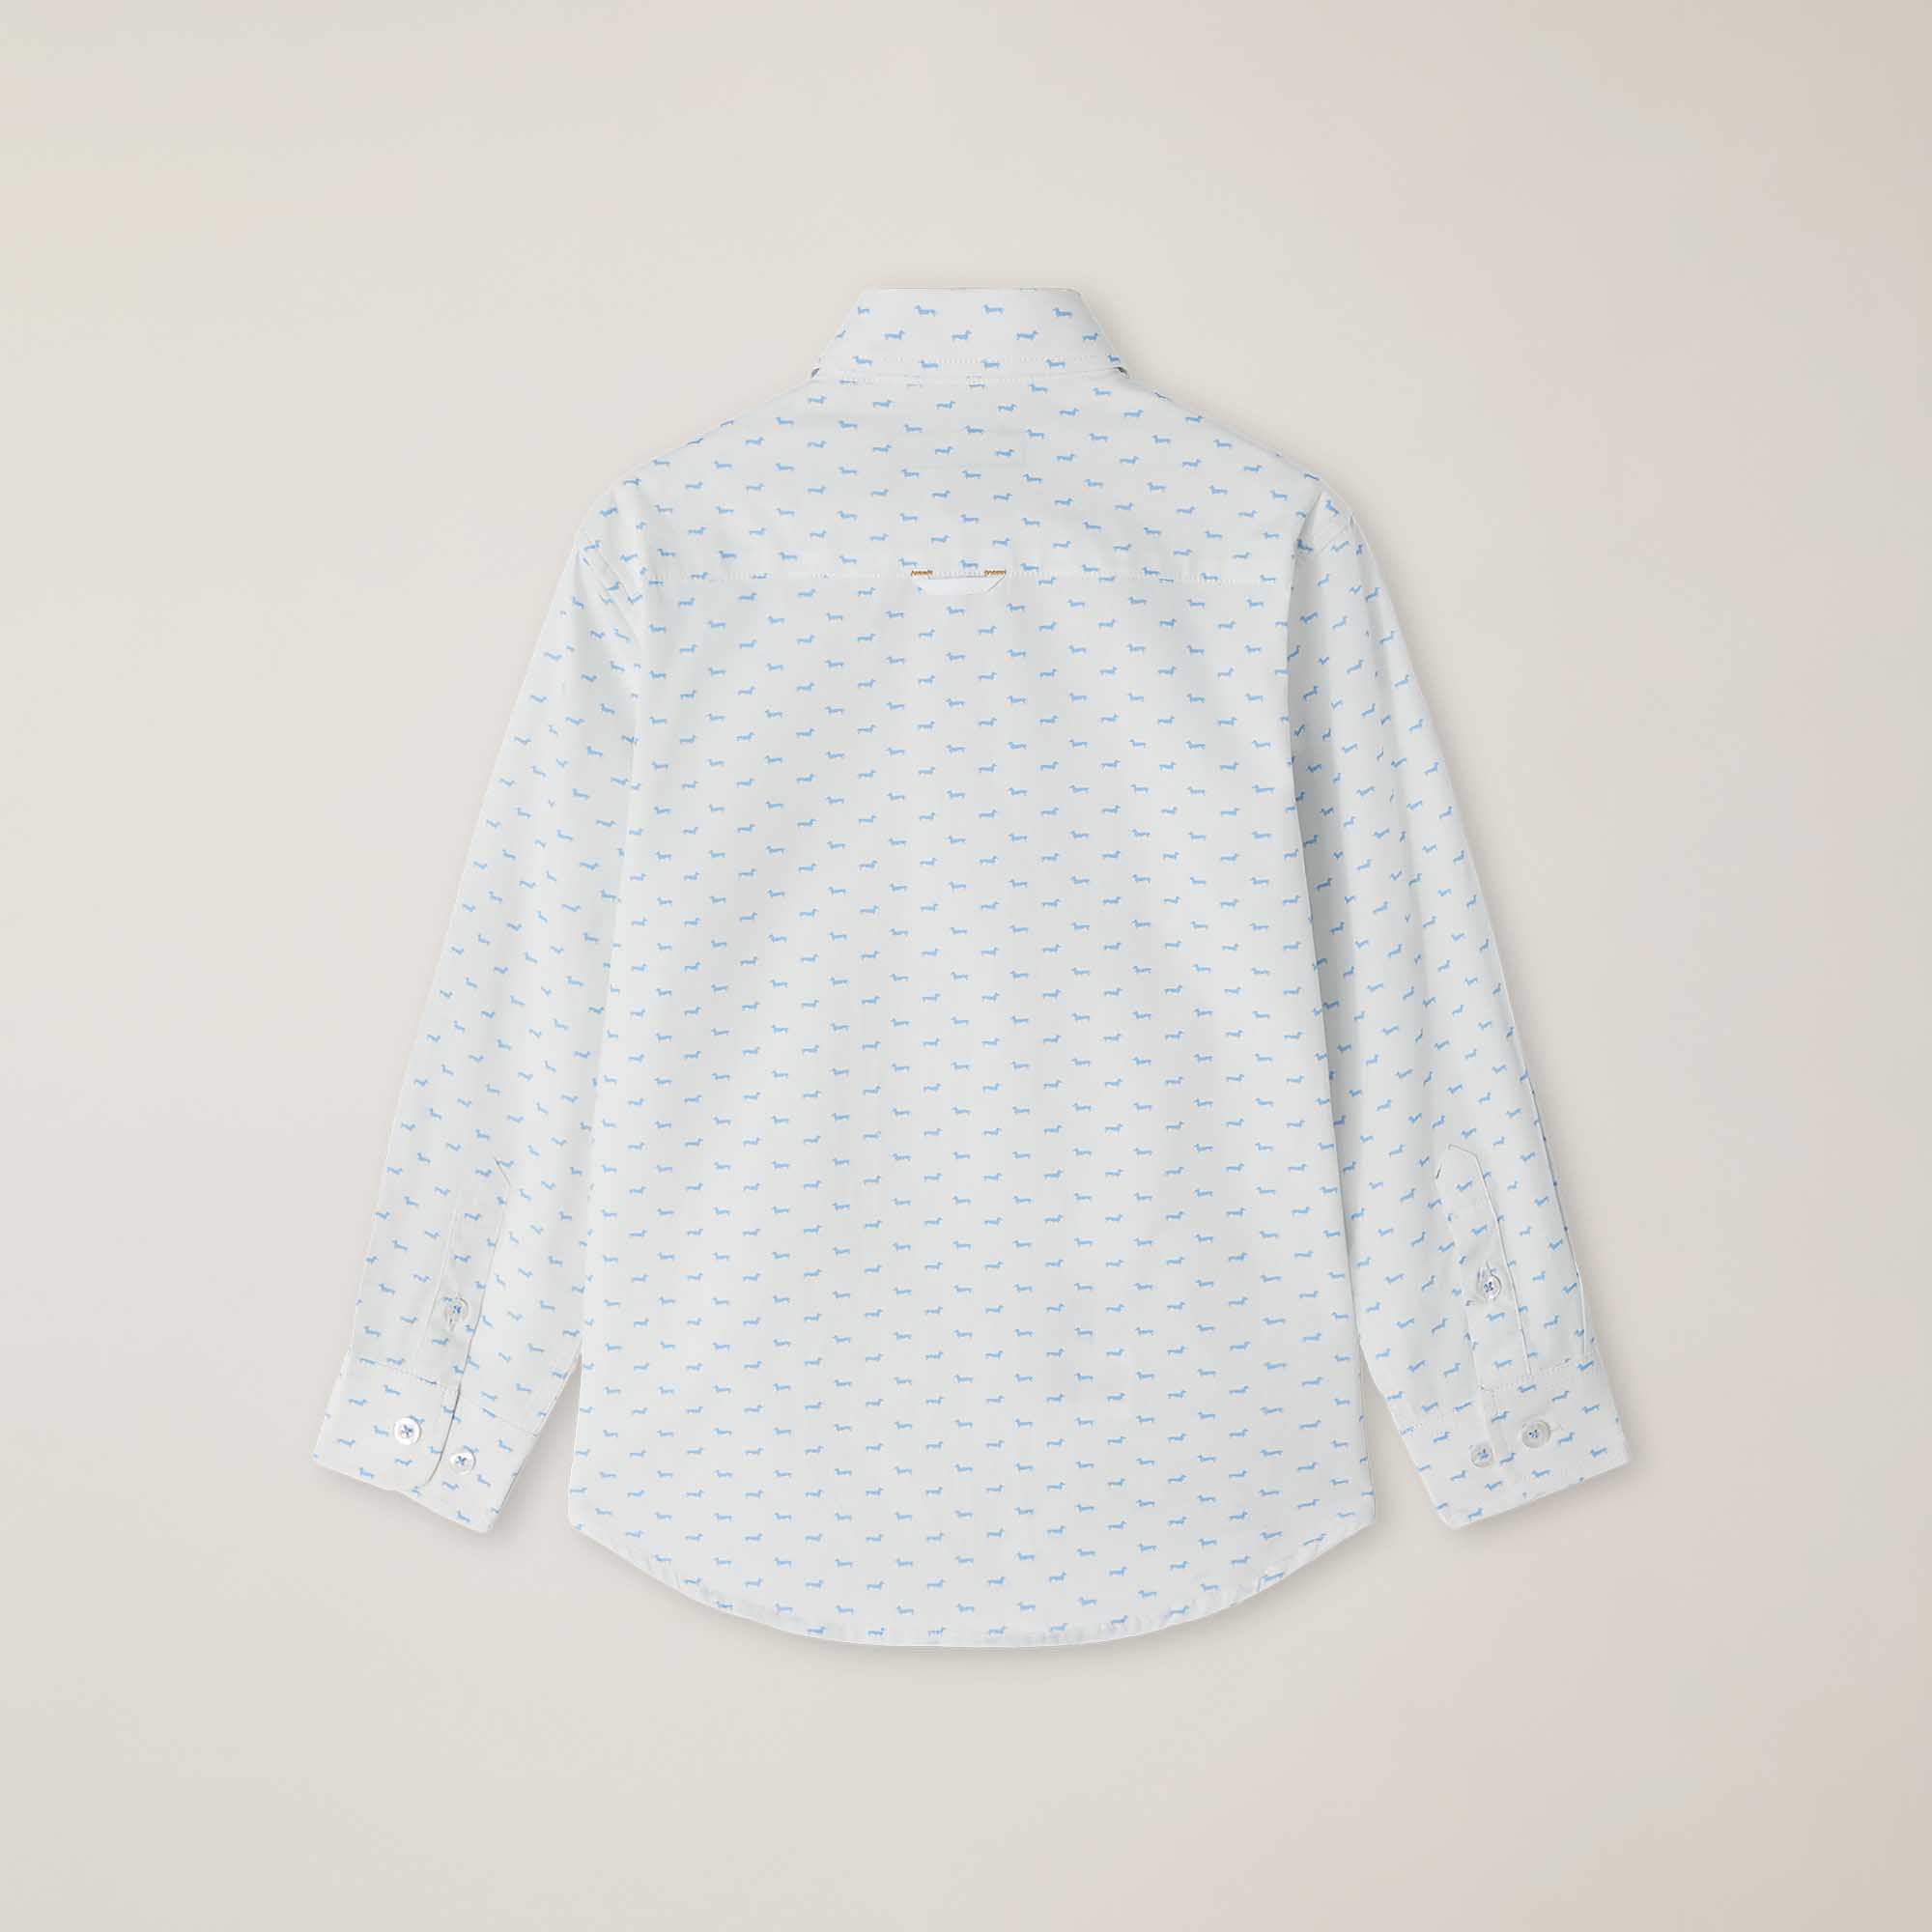 Poplin shirt with Dachshund micro pattern